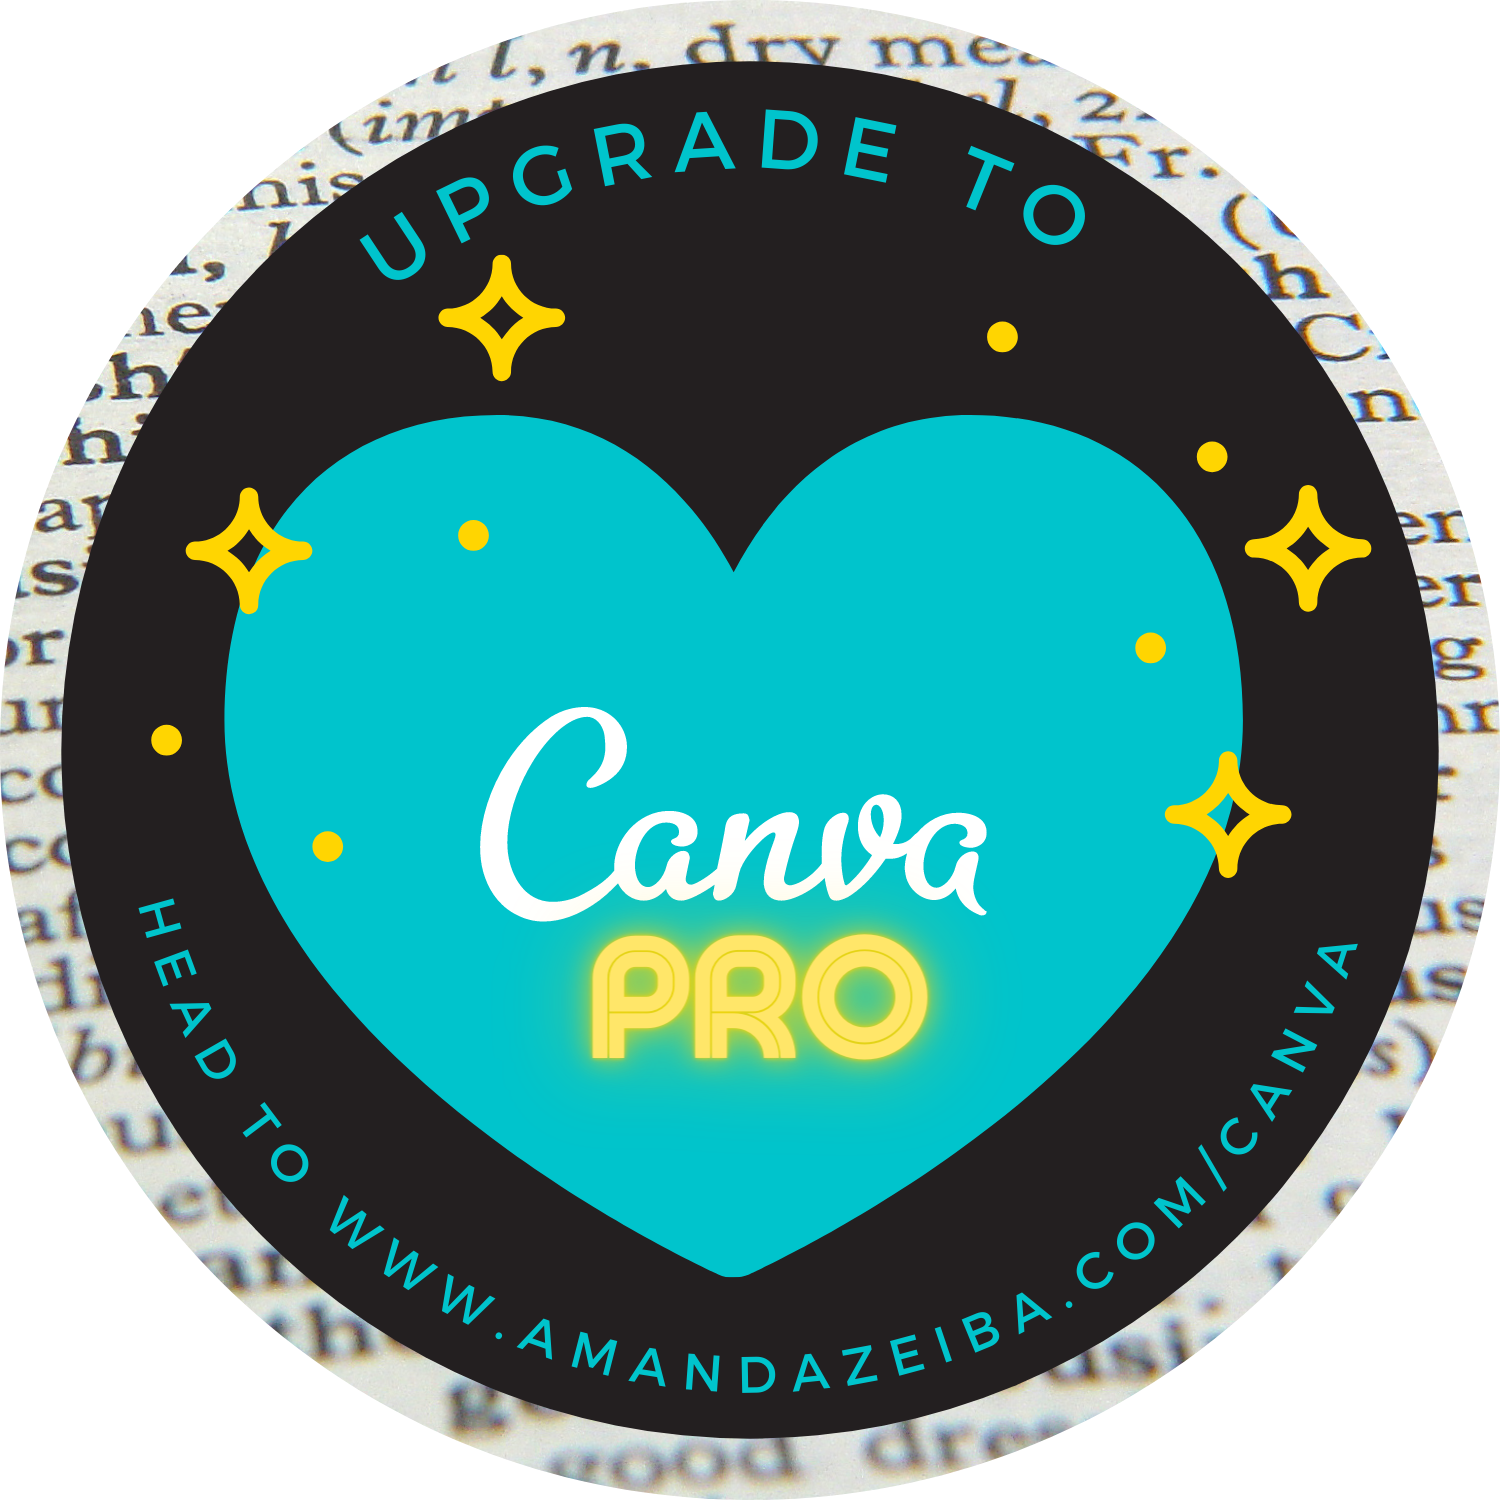 Upgrade to Canva Pro!